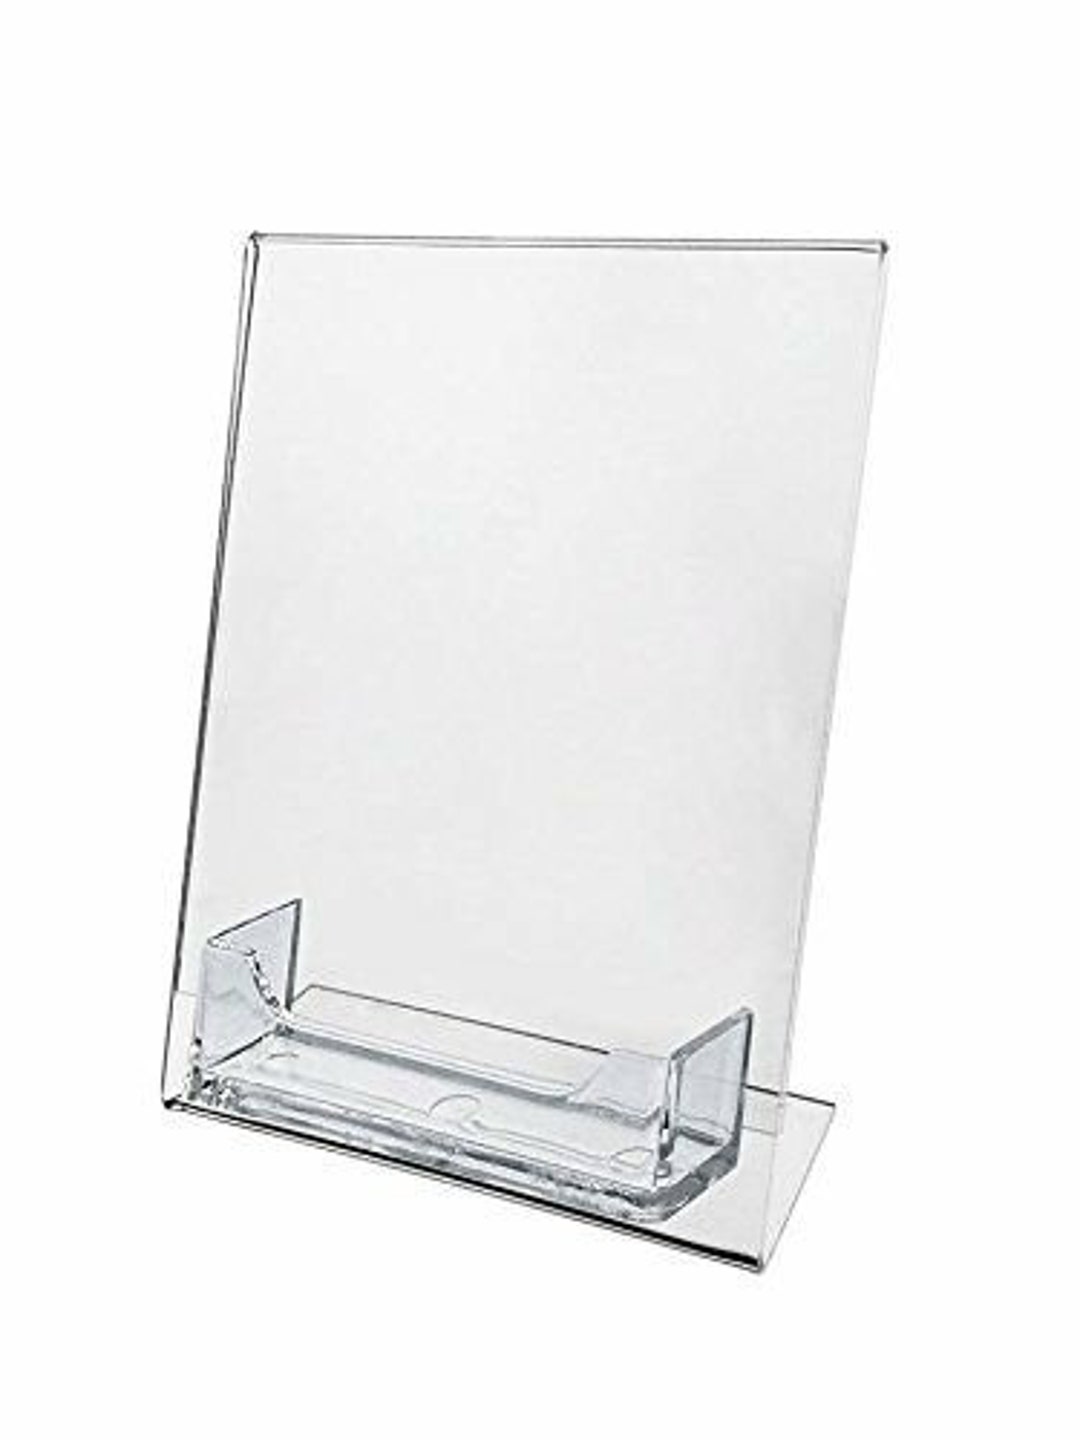 3/16 (4mm) Transluscent White Acrylic Plexiglass Sheet 12x12 AZM 